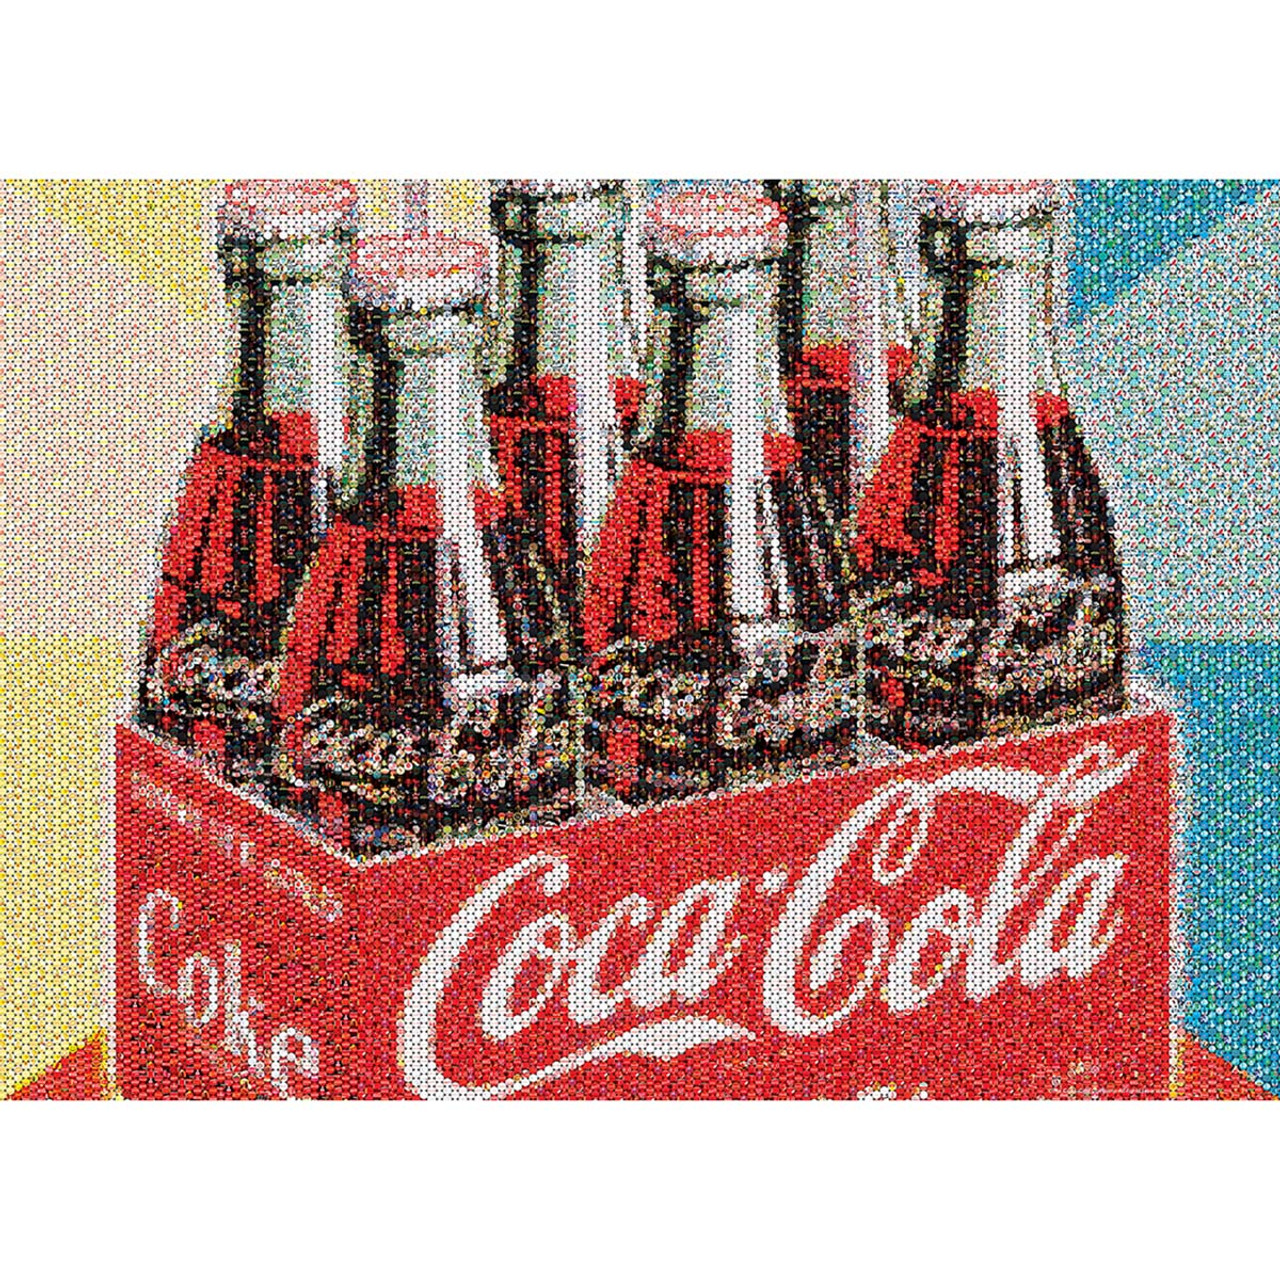 Masterpieces Puzzle Co Coca-Cola - Photomosaic Bottles Jigsaw Puzzle